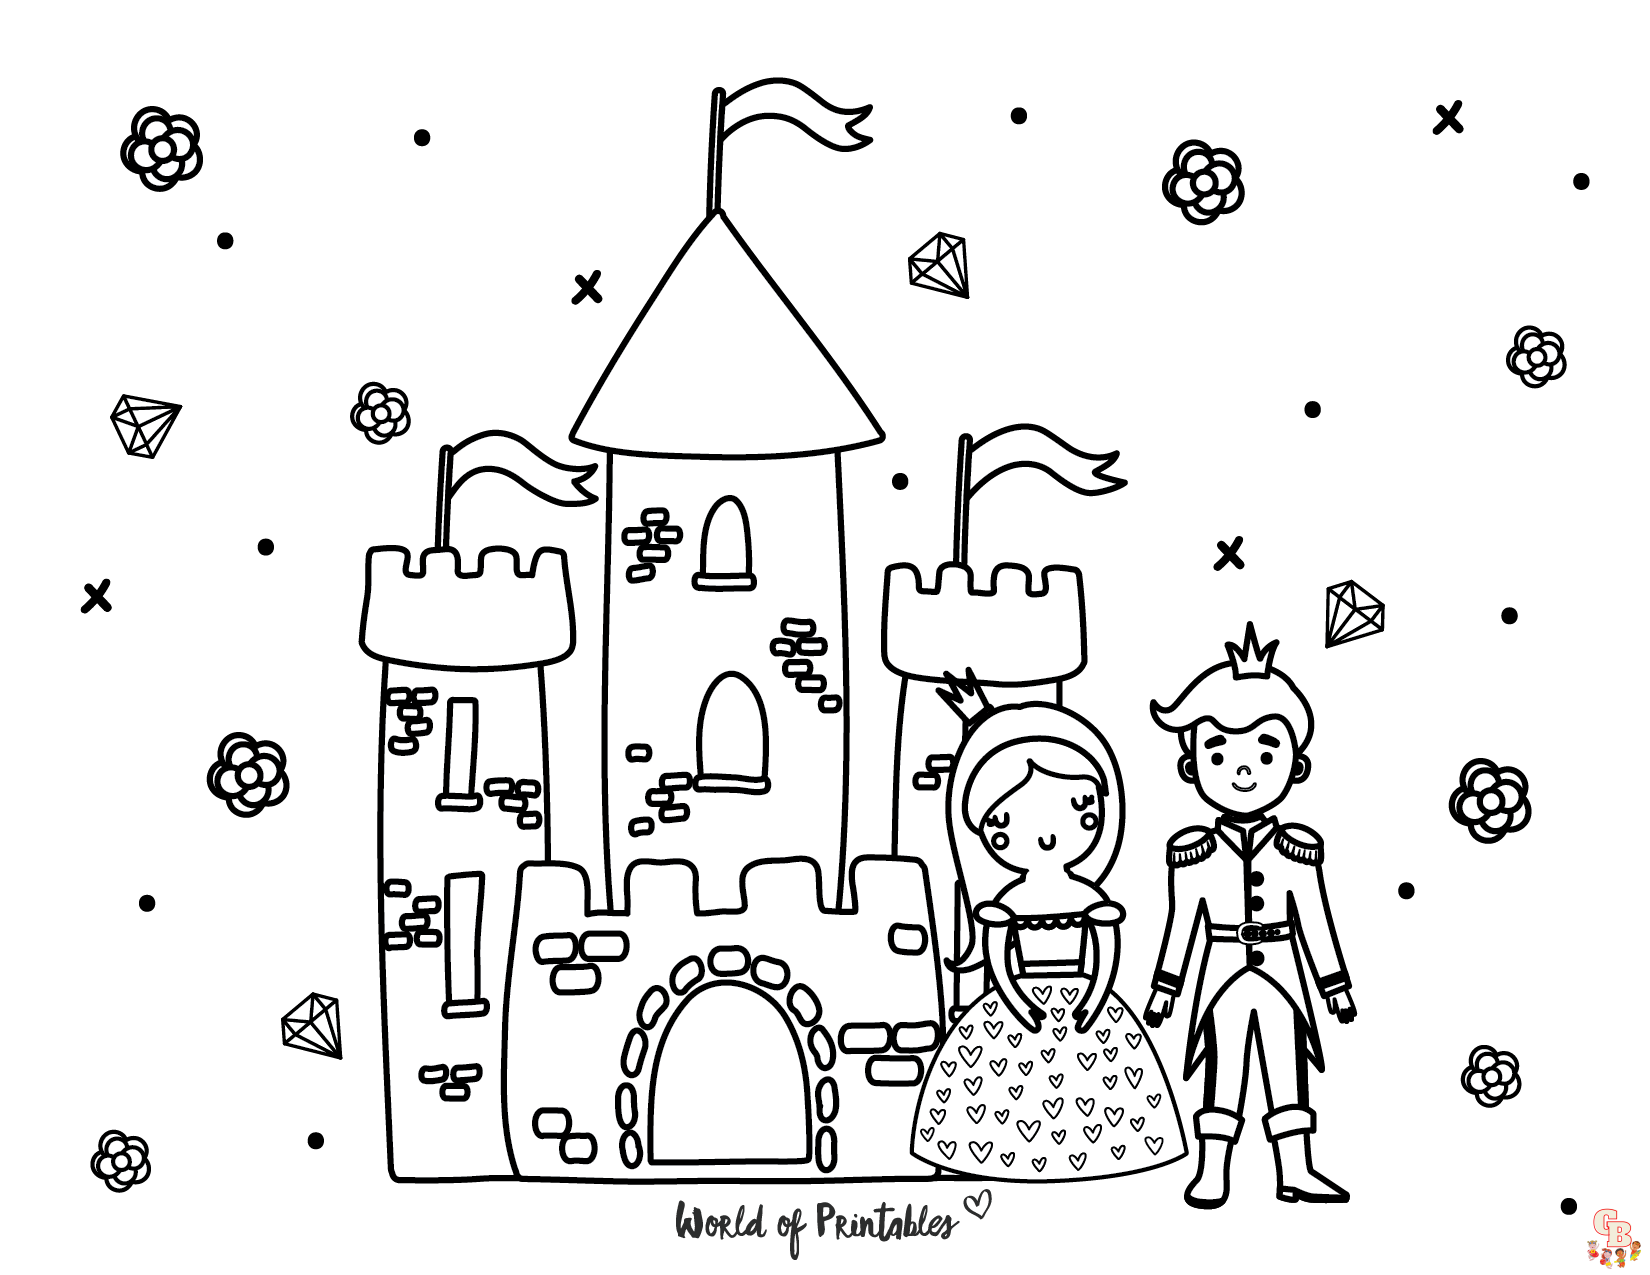 Princesa para colorir - Jogos para meninas : princesas, castelos e